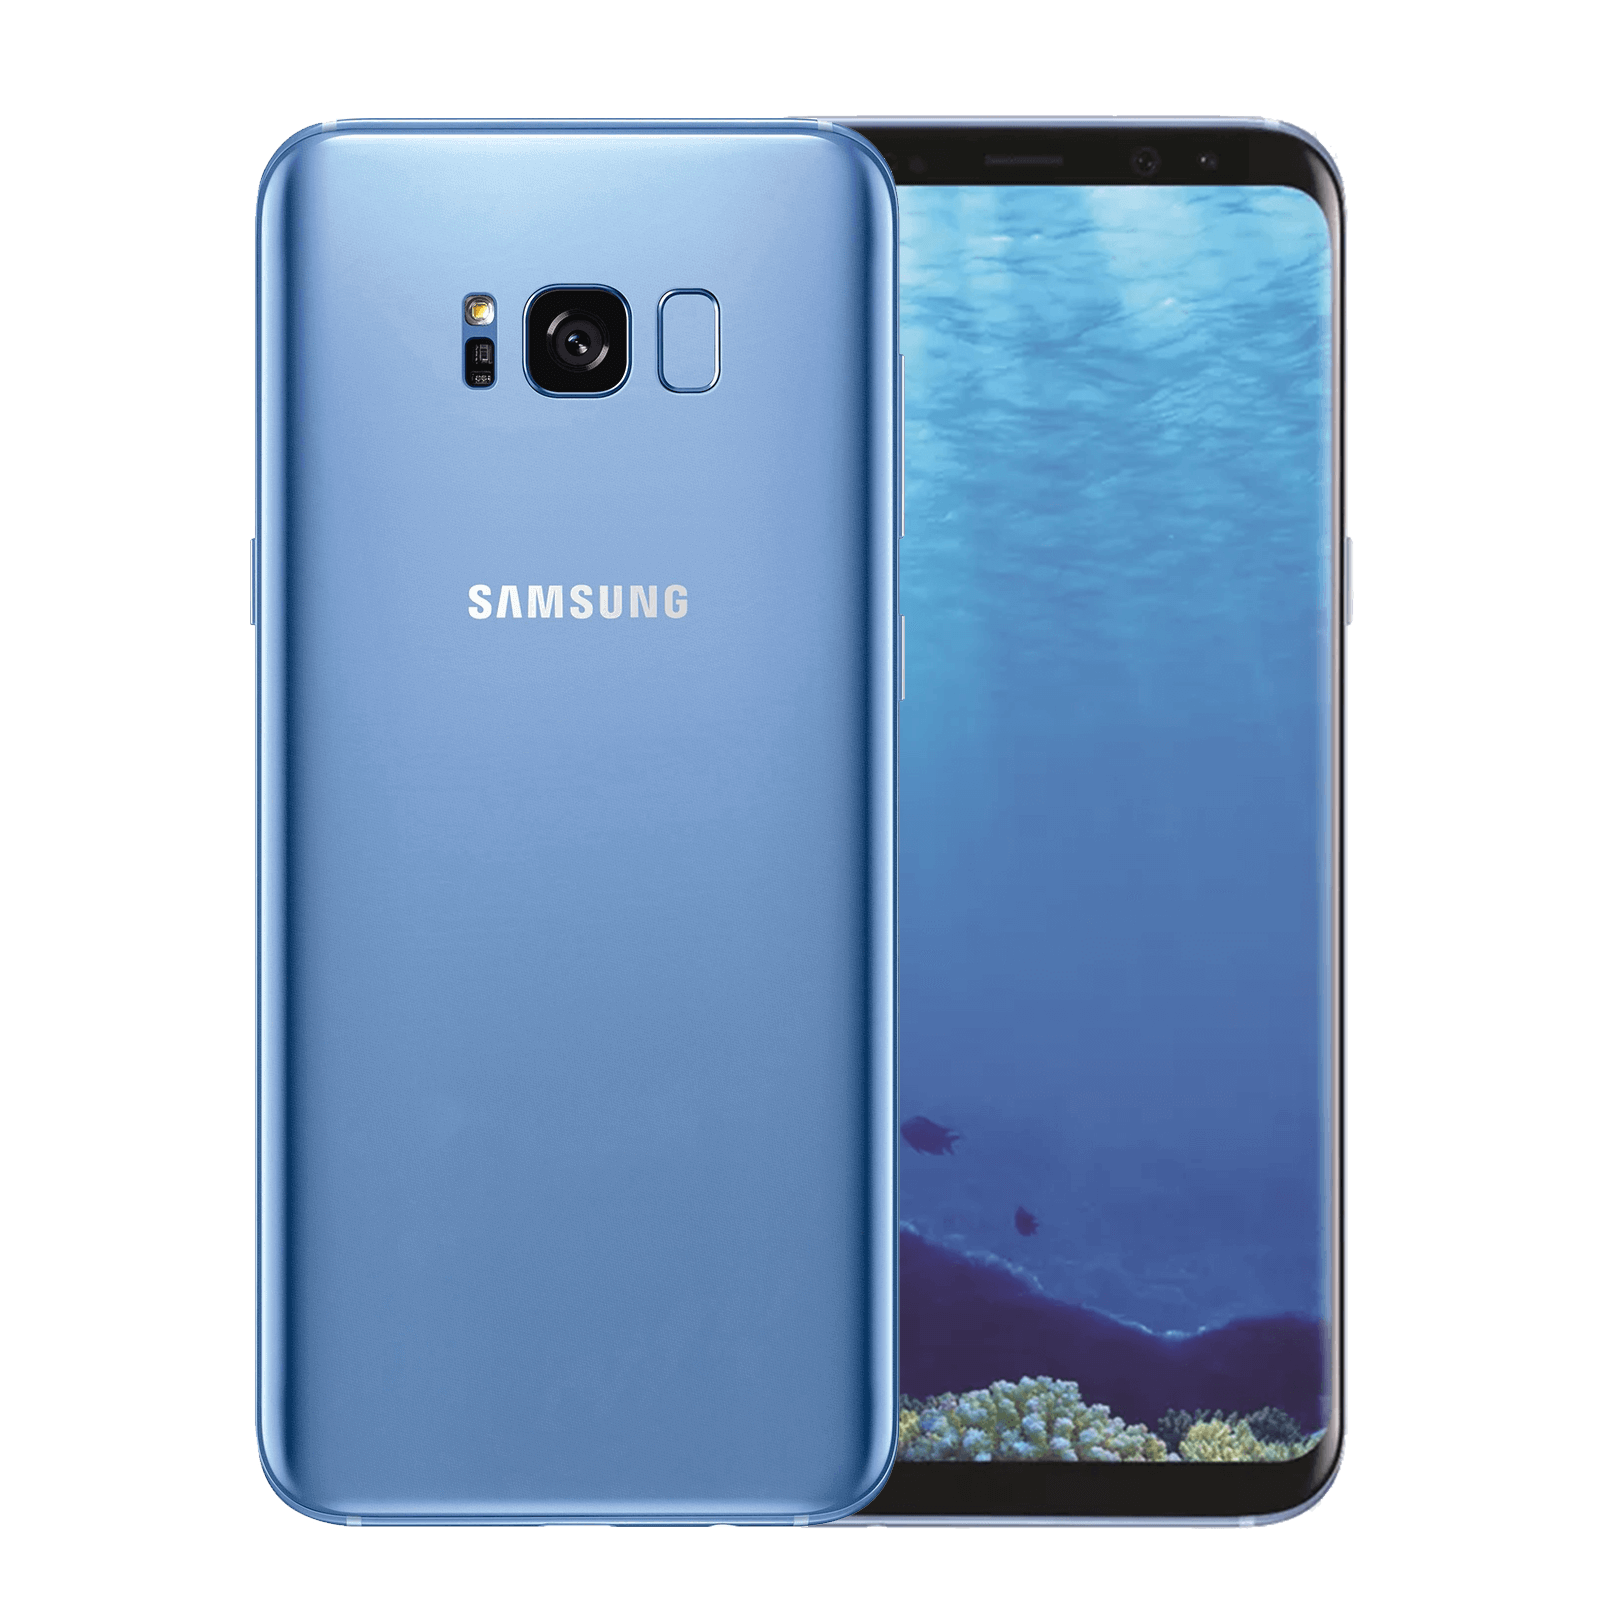 Samsung Galaxy S8 64GB Blue G950F Very Good - Unlocked 64GB Blue Very Good